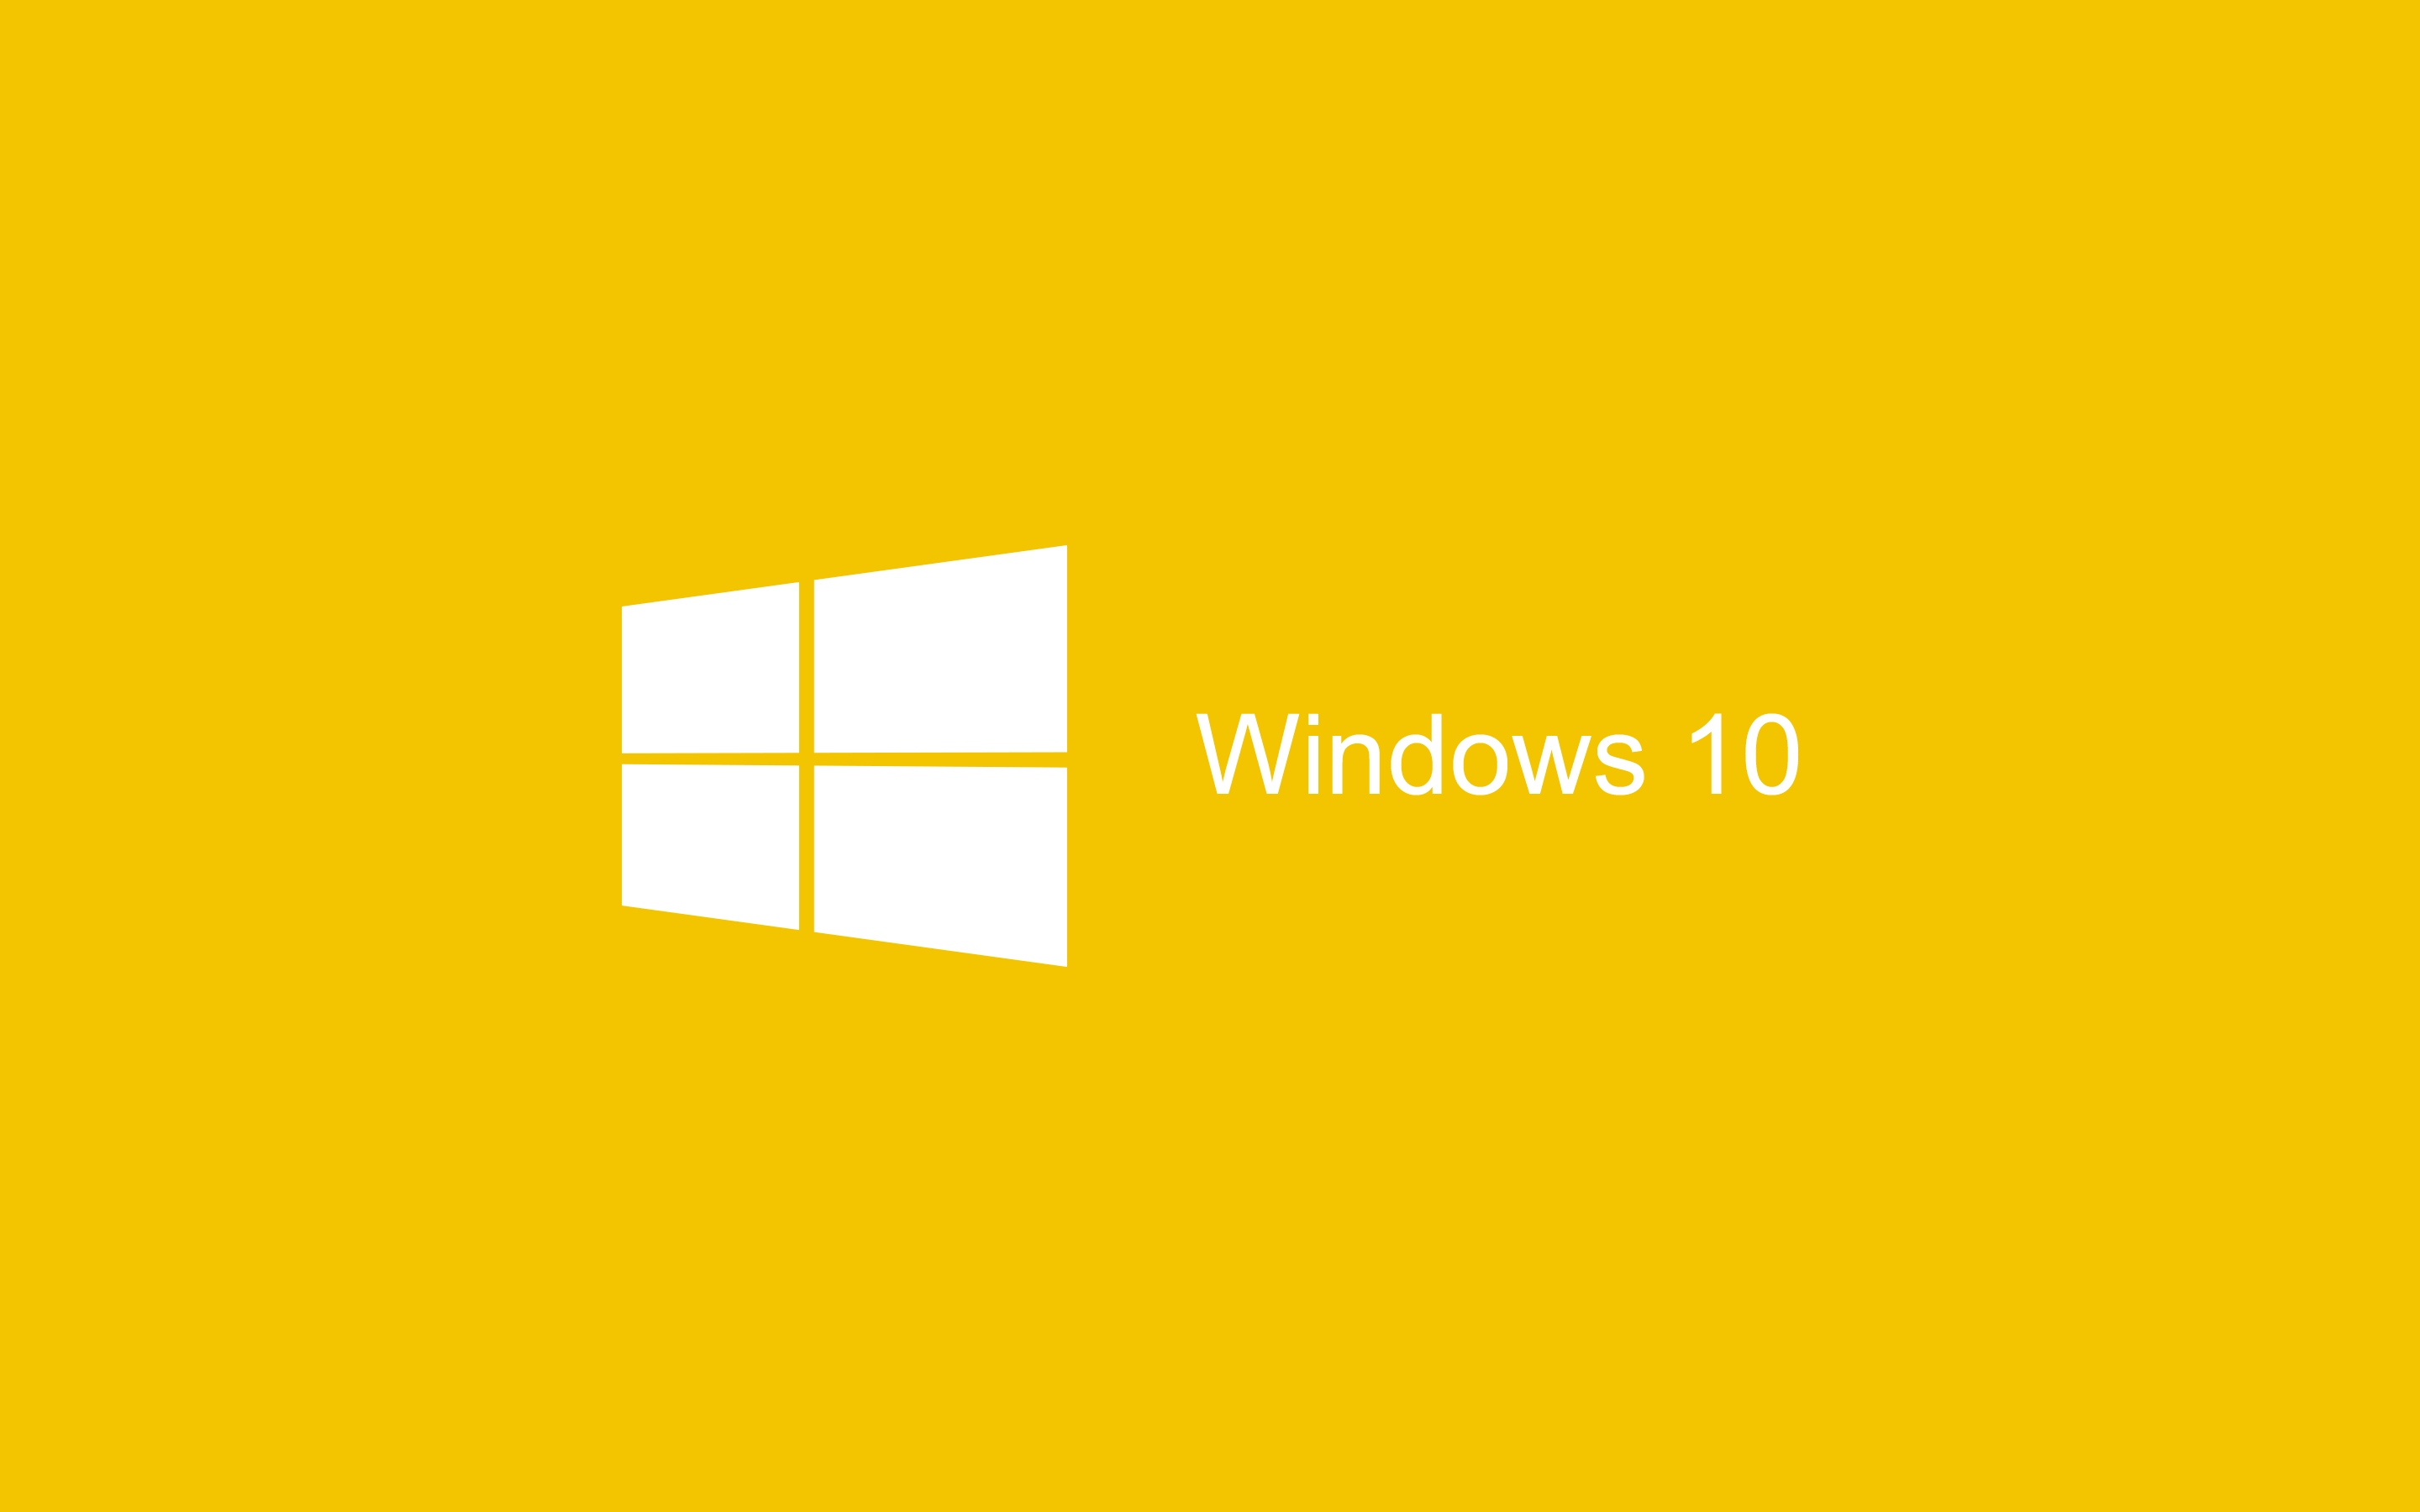 install windows 10 step by step